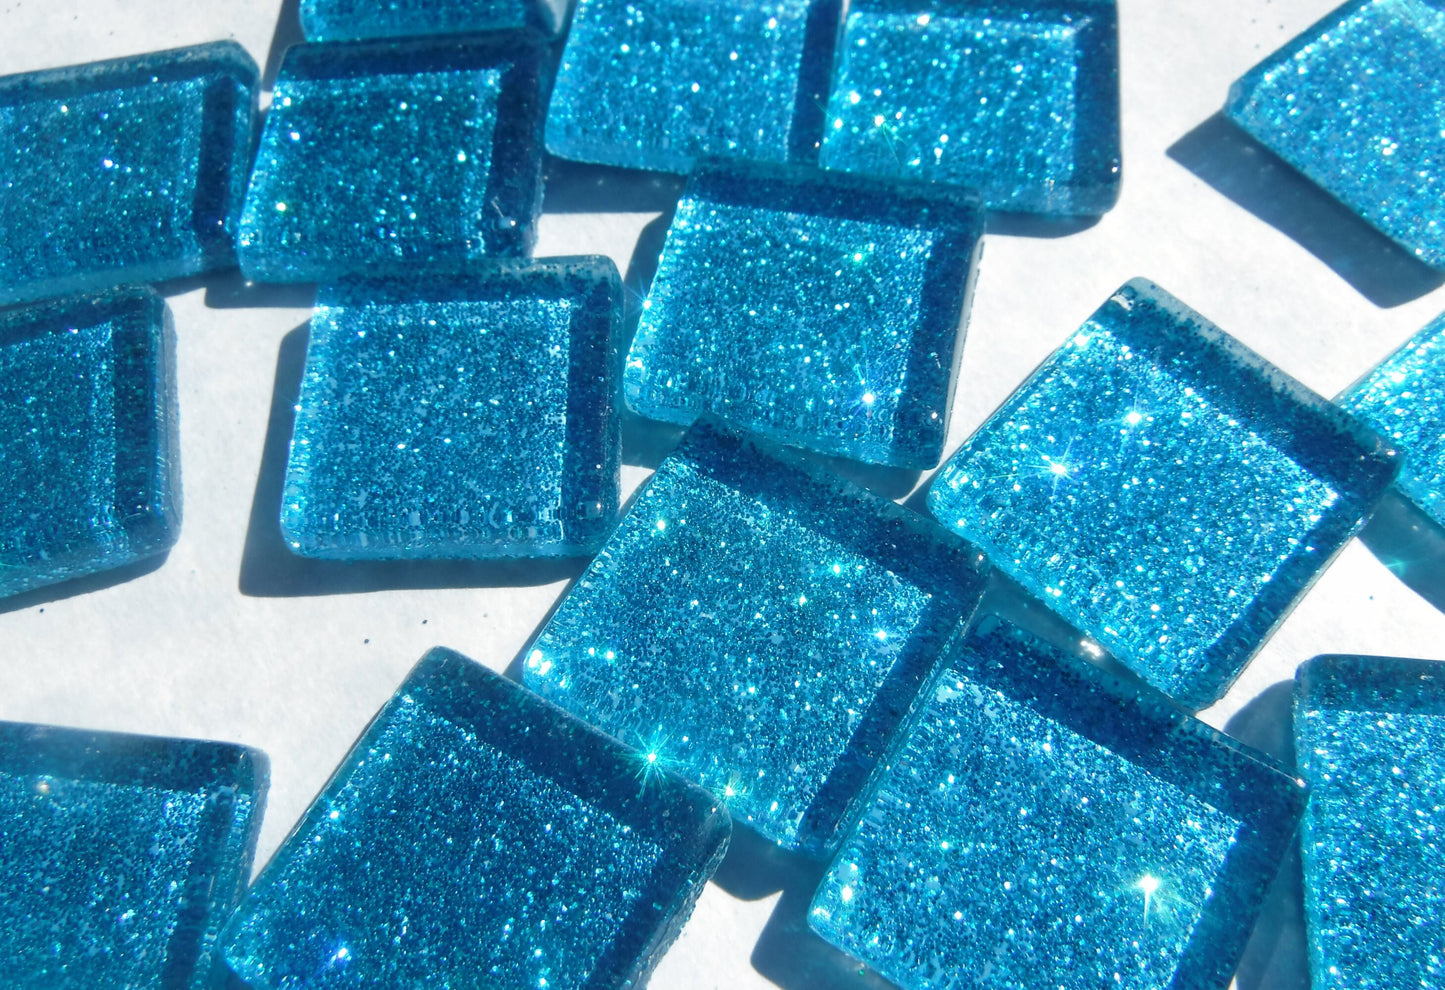 Sky Blue Glitter Tiles - 20mm Mosaic Tiles - 25 Metallic Glass Tiles in Medium Blue